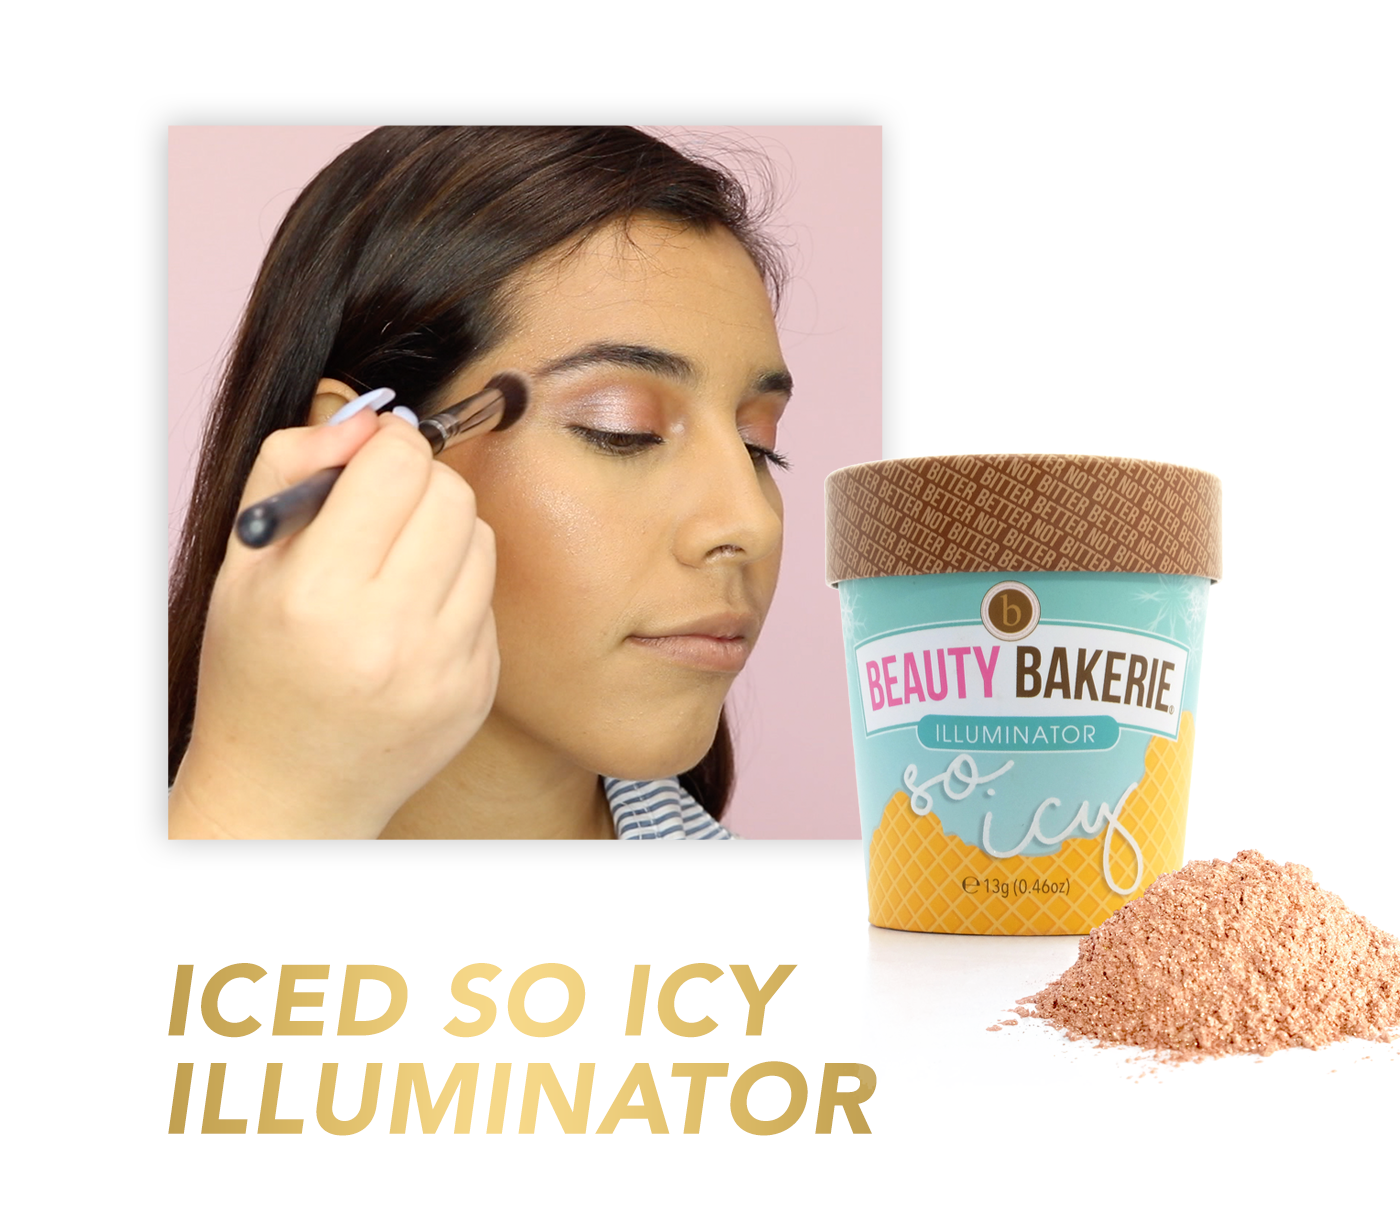 Iced So Icy Illuminator